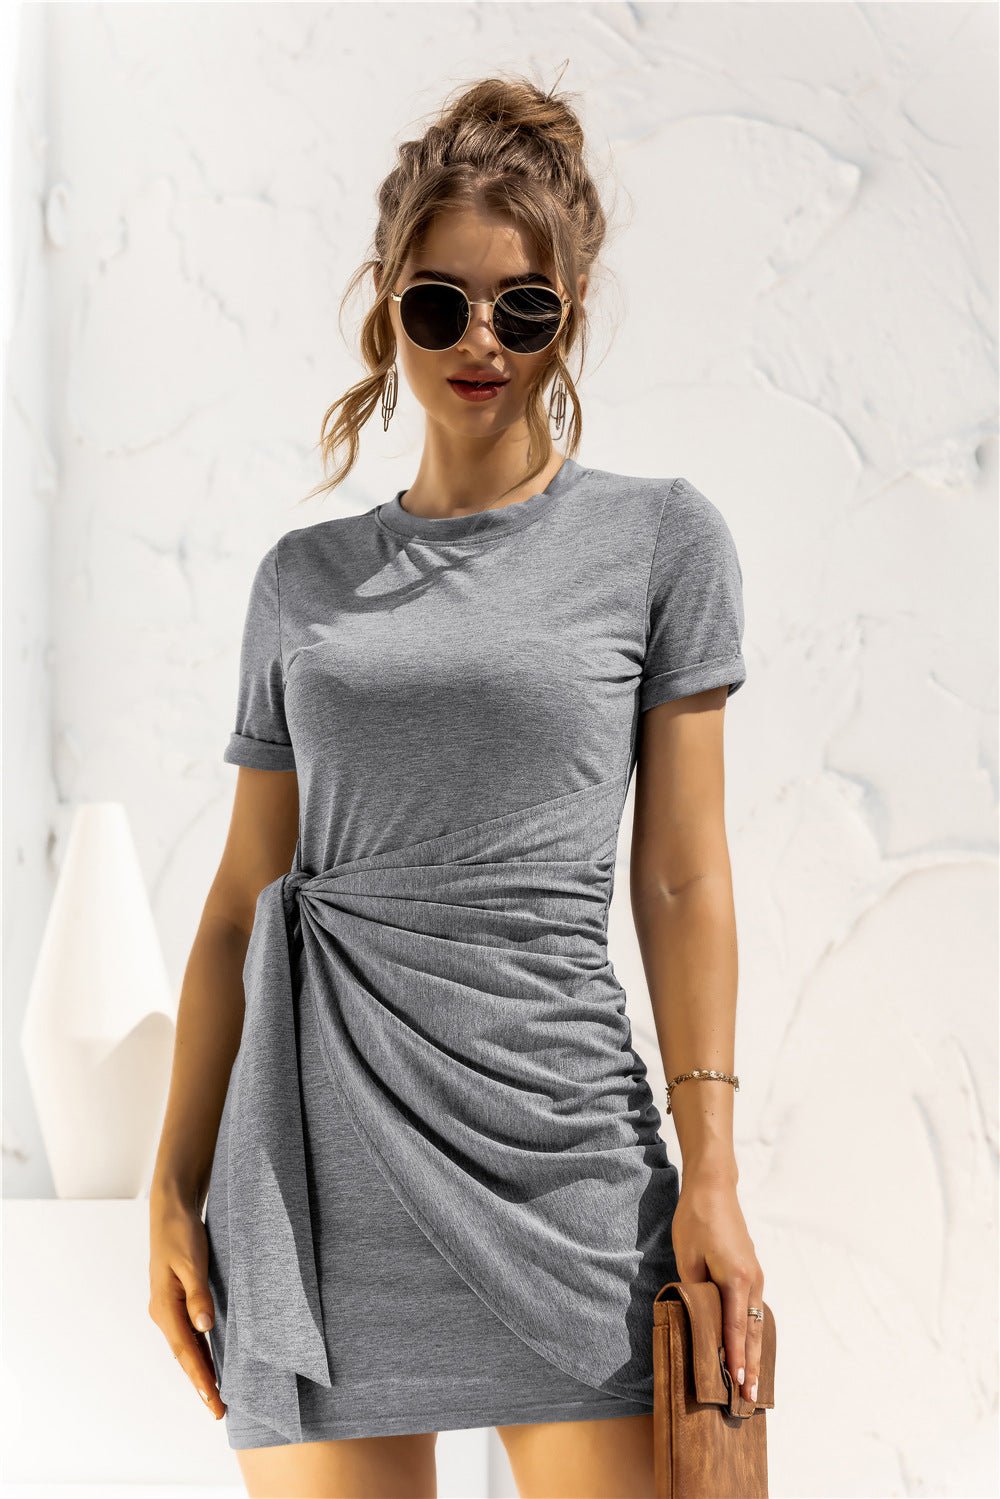 Round Neck Cuffed Sleeve Side Tie Dress - Fashion Girl Online Store